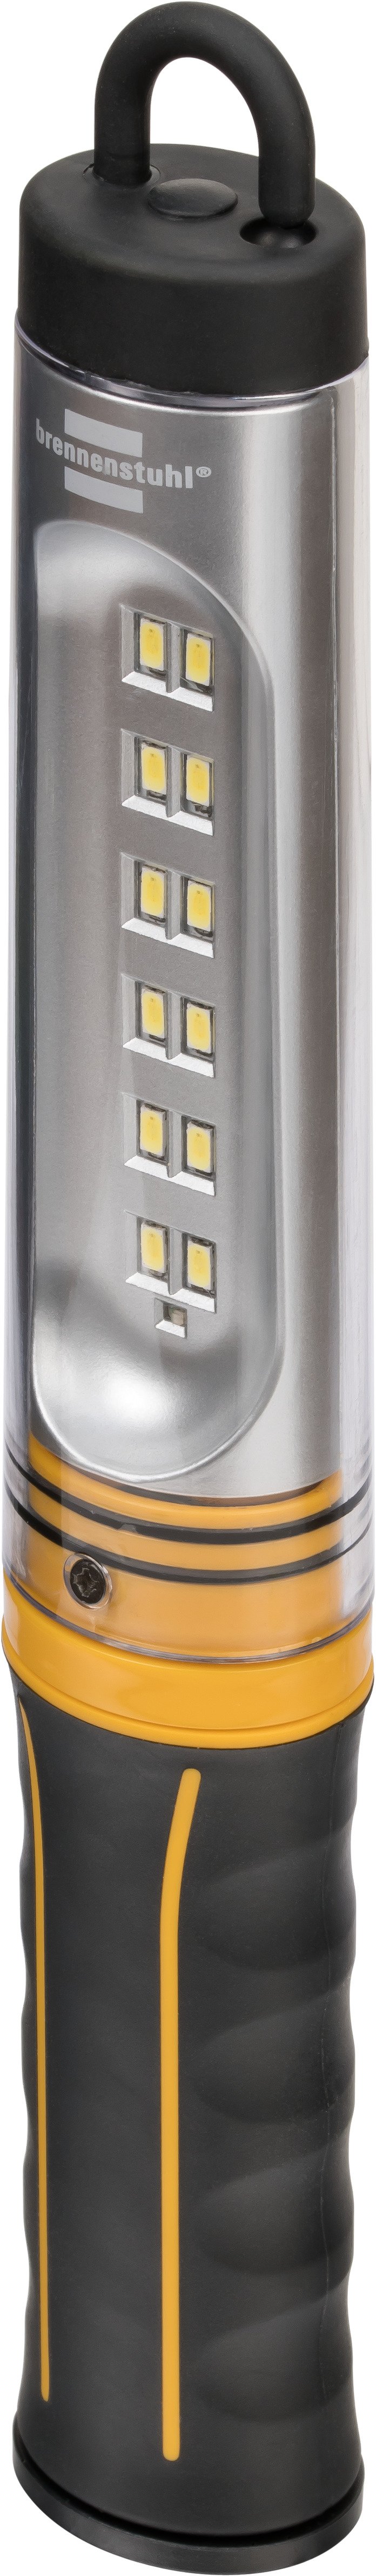 LED darbo lempa BRENNENSTUHL, IP54, 520lm, įkraunama USB, juodos spalvos - 1